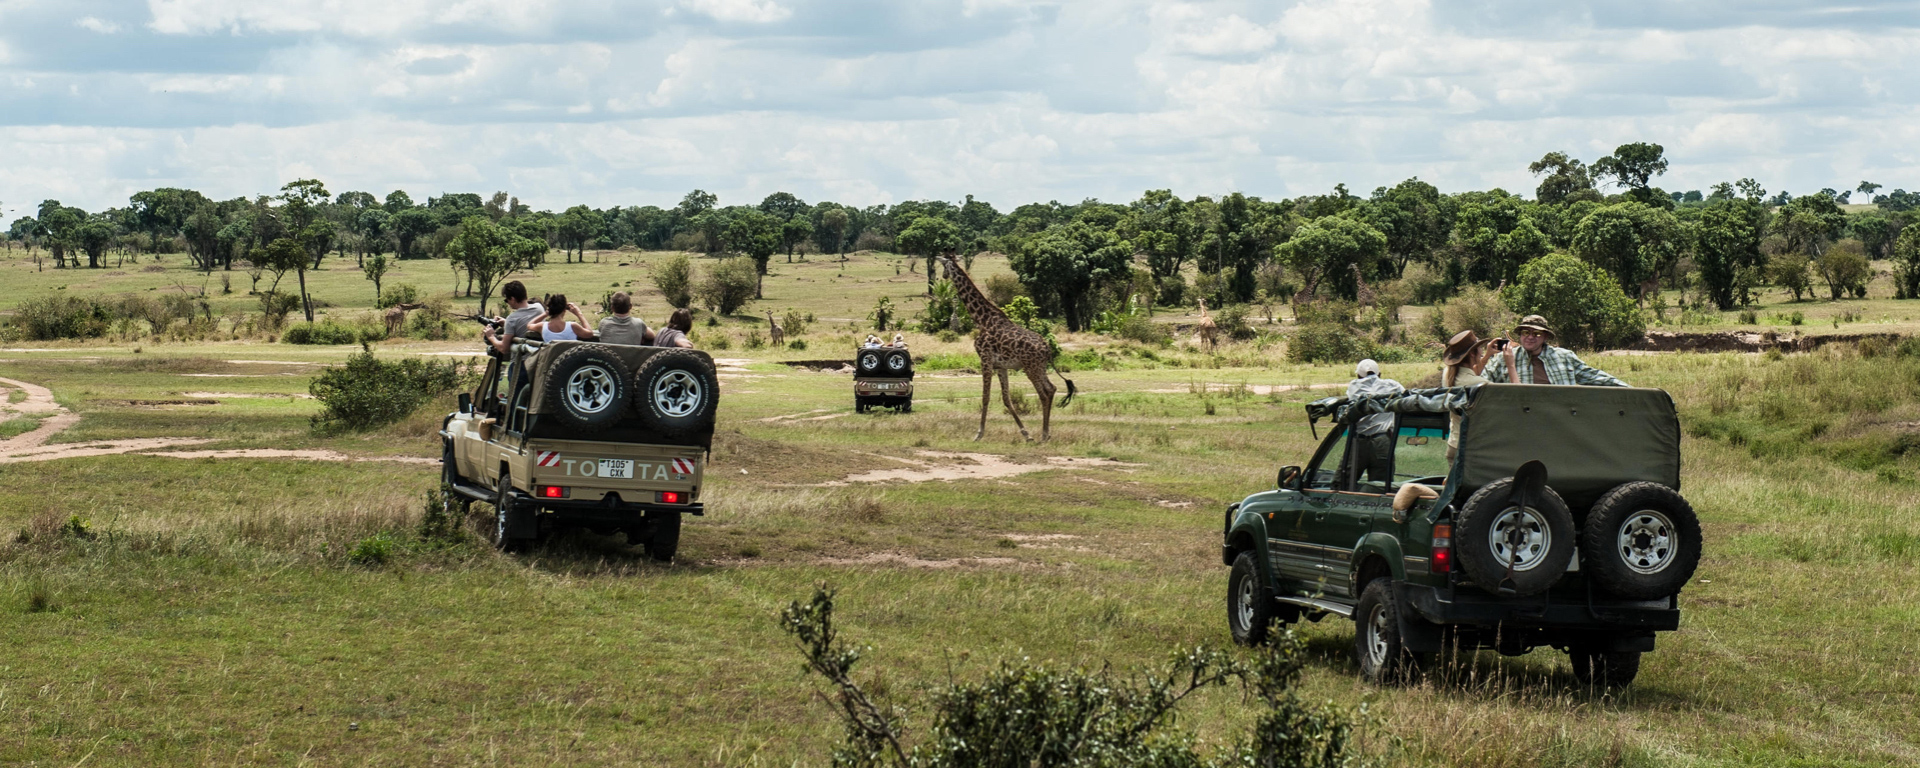 What Makes A Bad Safari